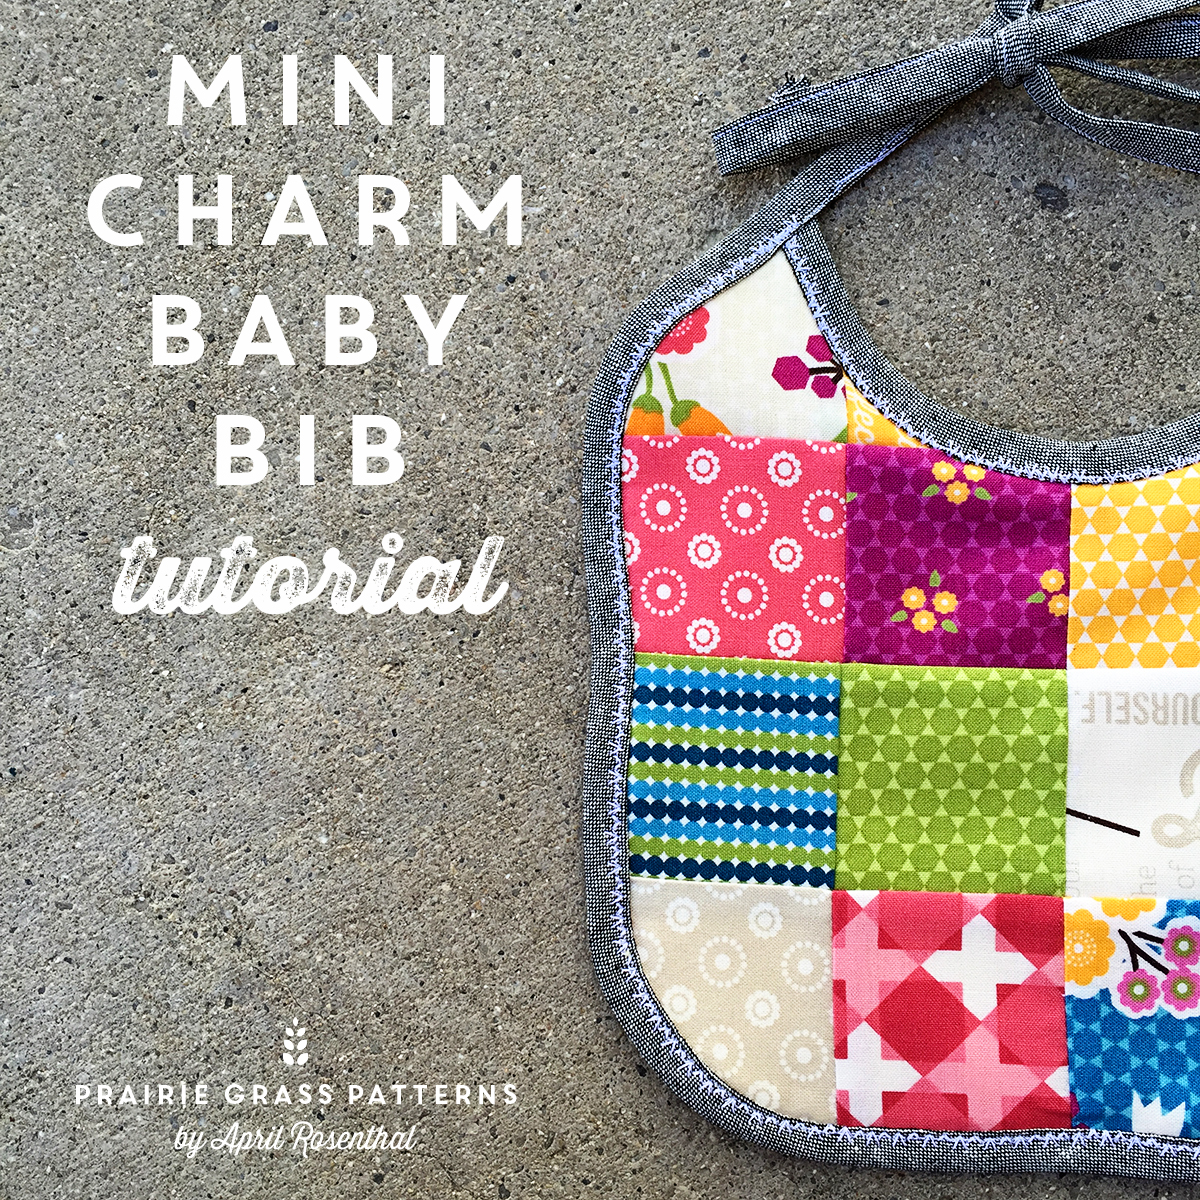 MiniCharm Baby Bib by April Rosenthal